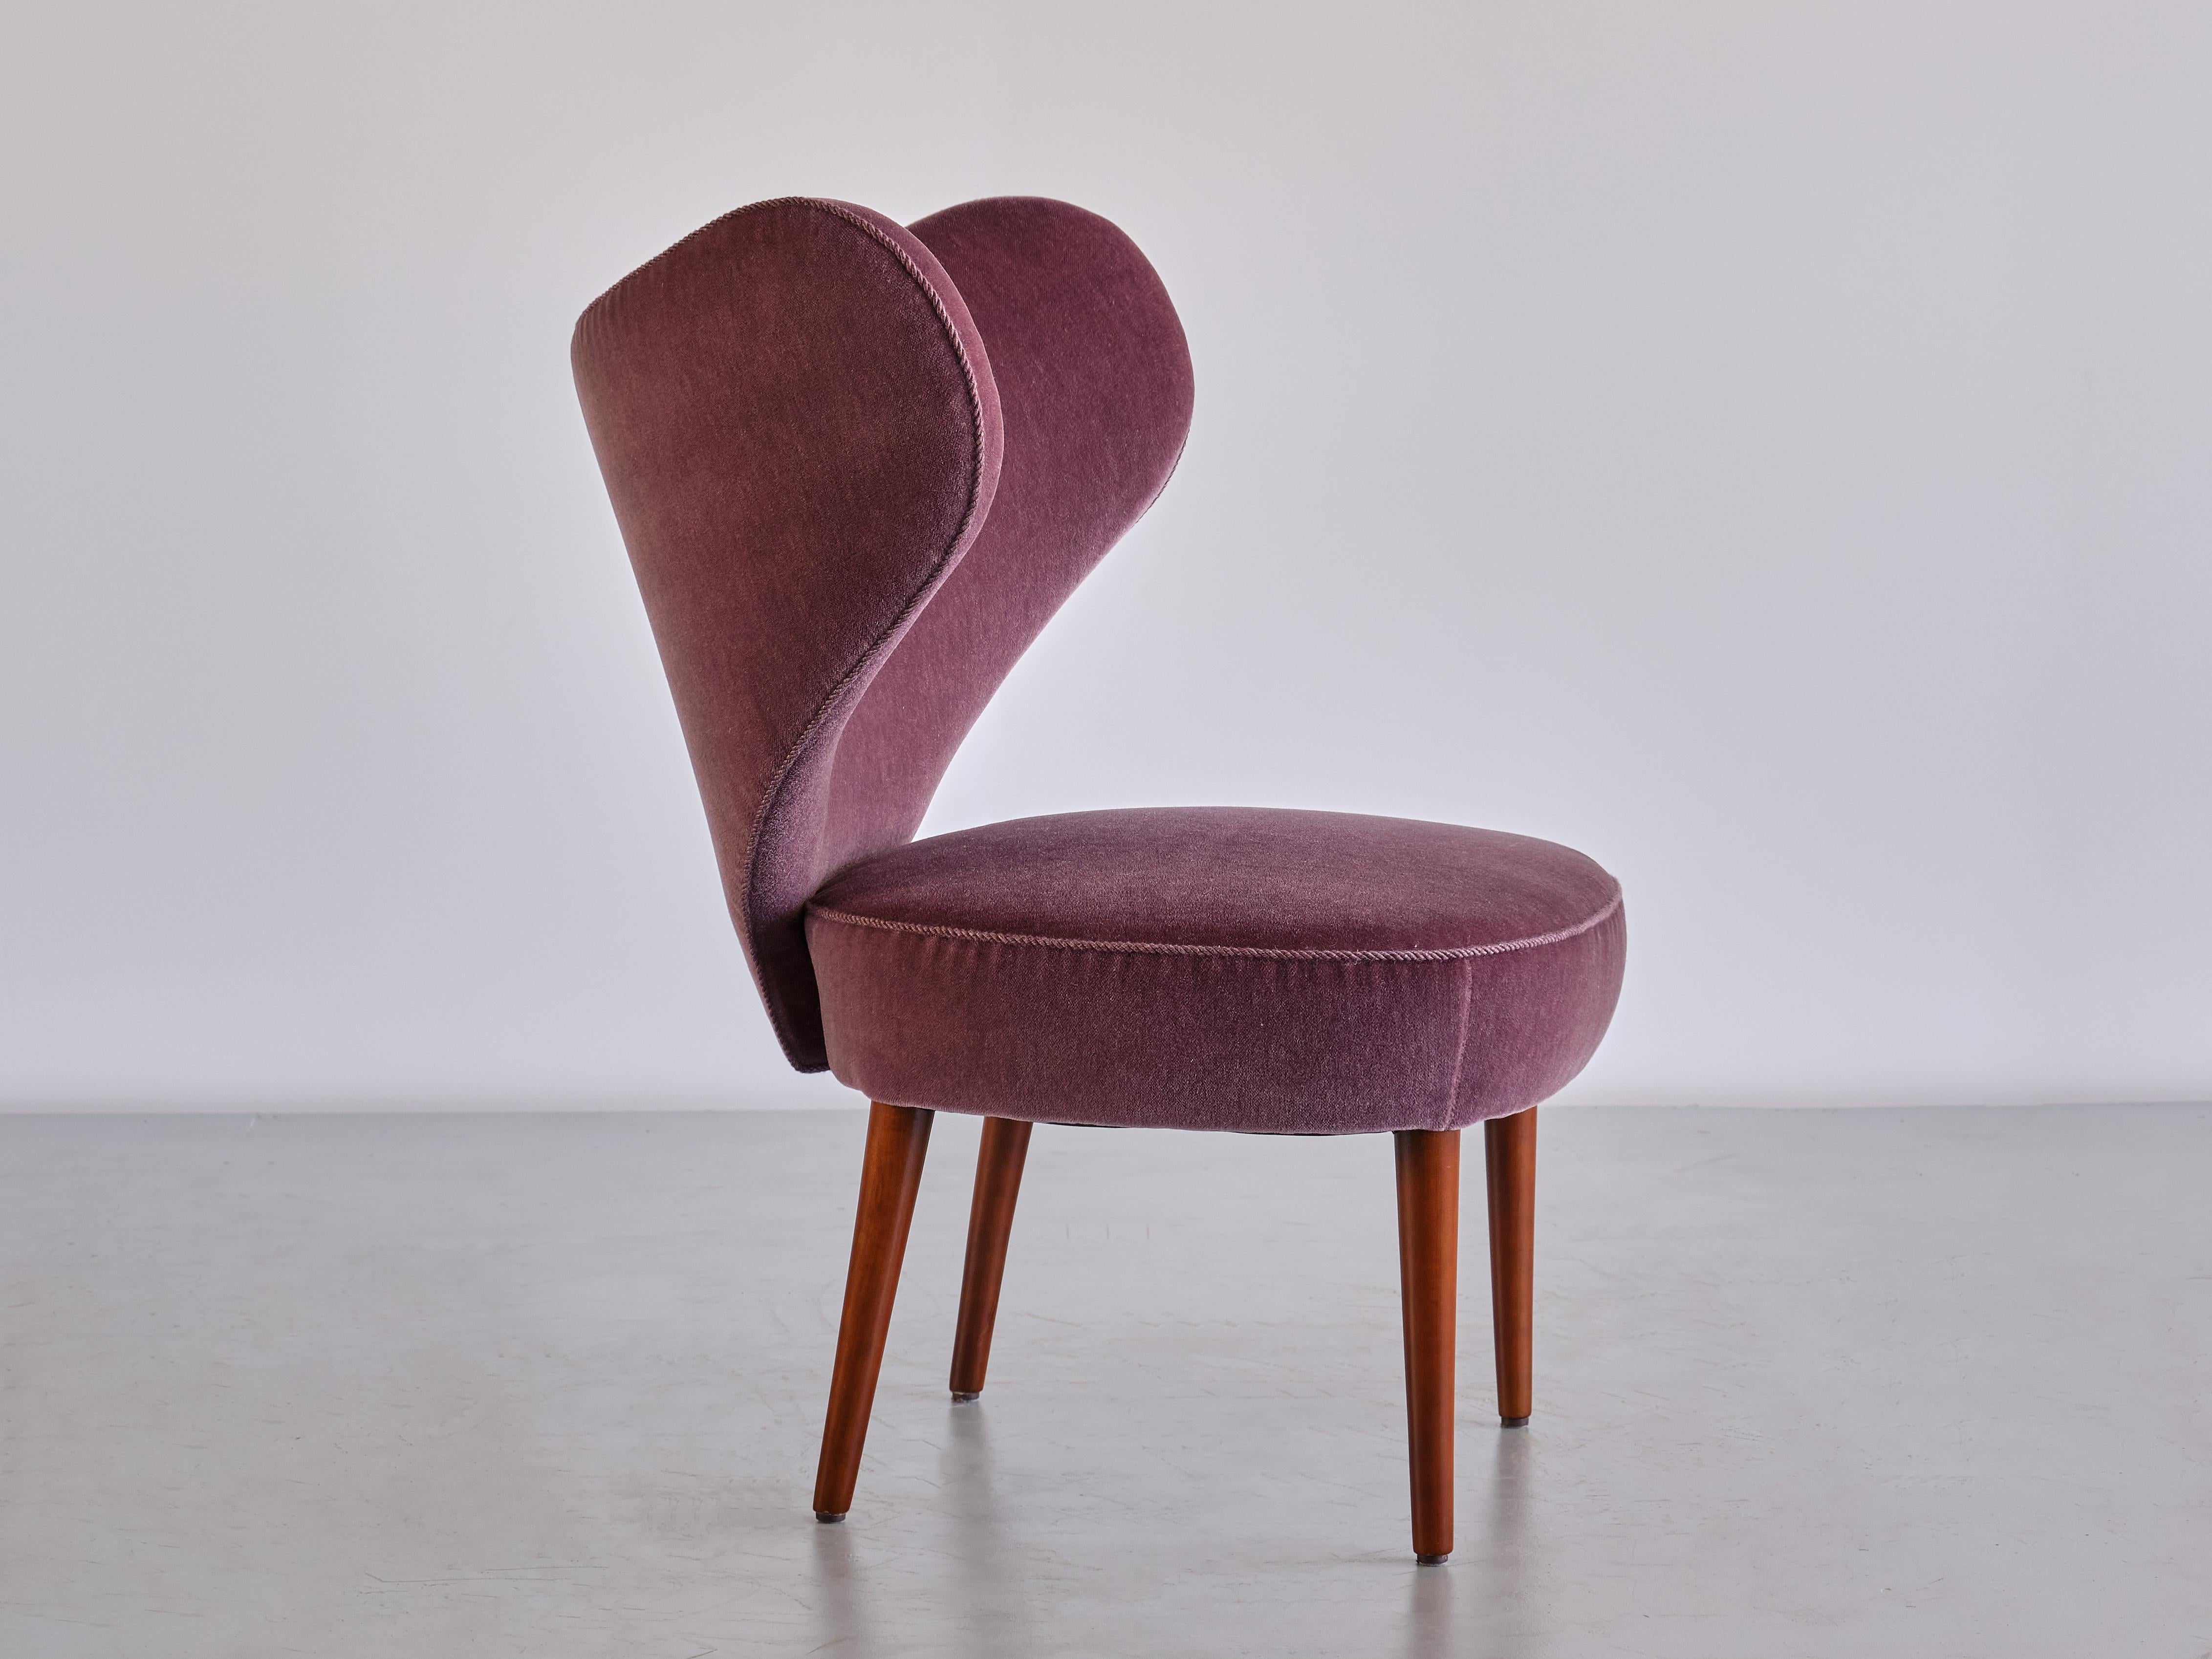 Exceptional 'Heart' Chair in Purple Mohair, Brøndbyøster Møbel, Denmark, 1953 For Sale 1